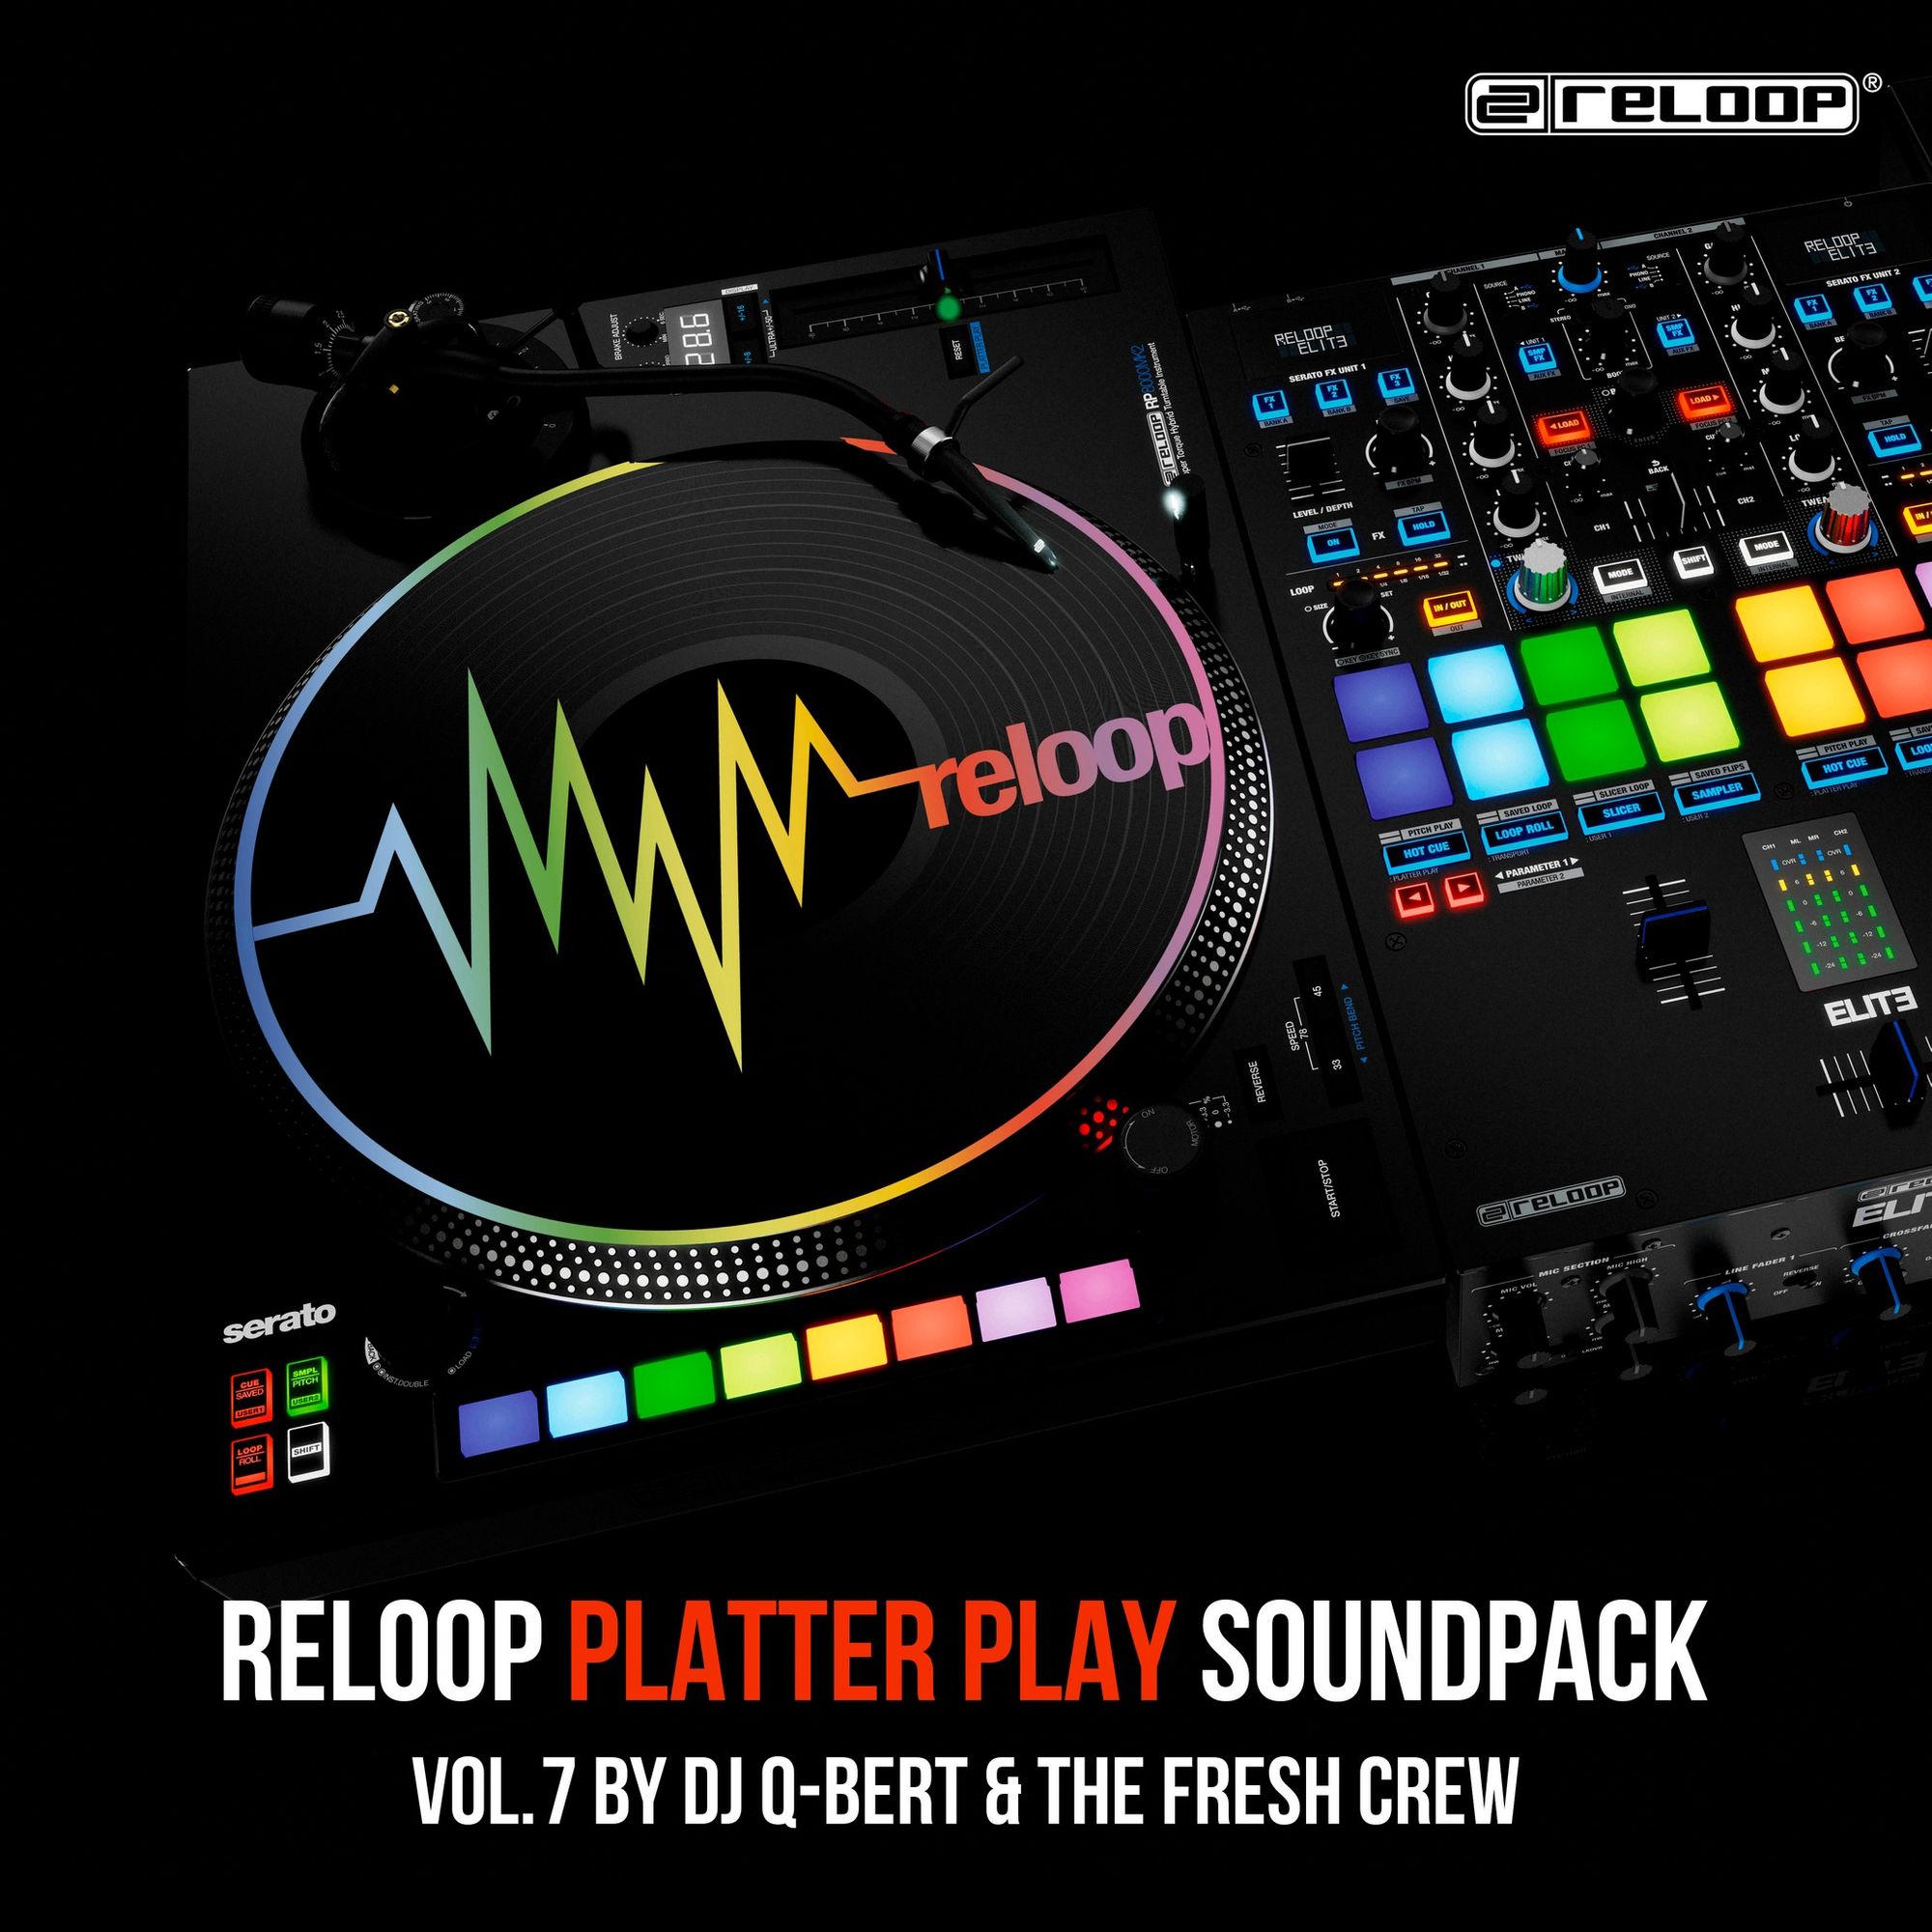 RELOOP PLATTER PLAY SOUNDPACK VOL. 7 BY DJ QBert & The Fresh Crew